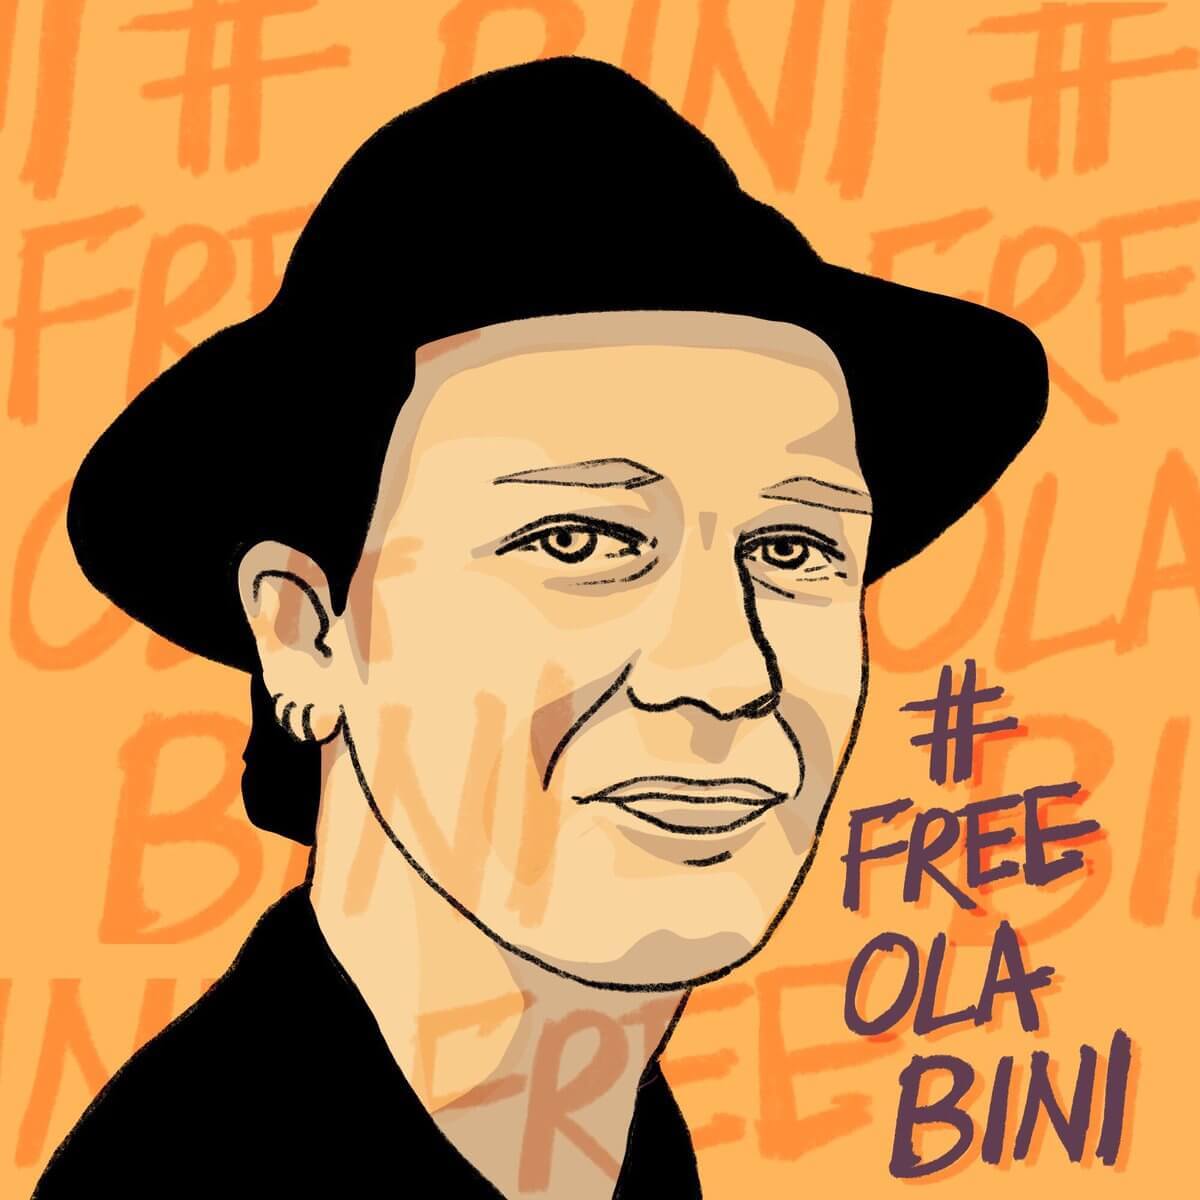 Arresto de Ola Bini